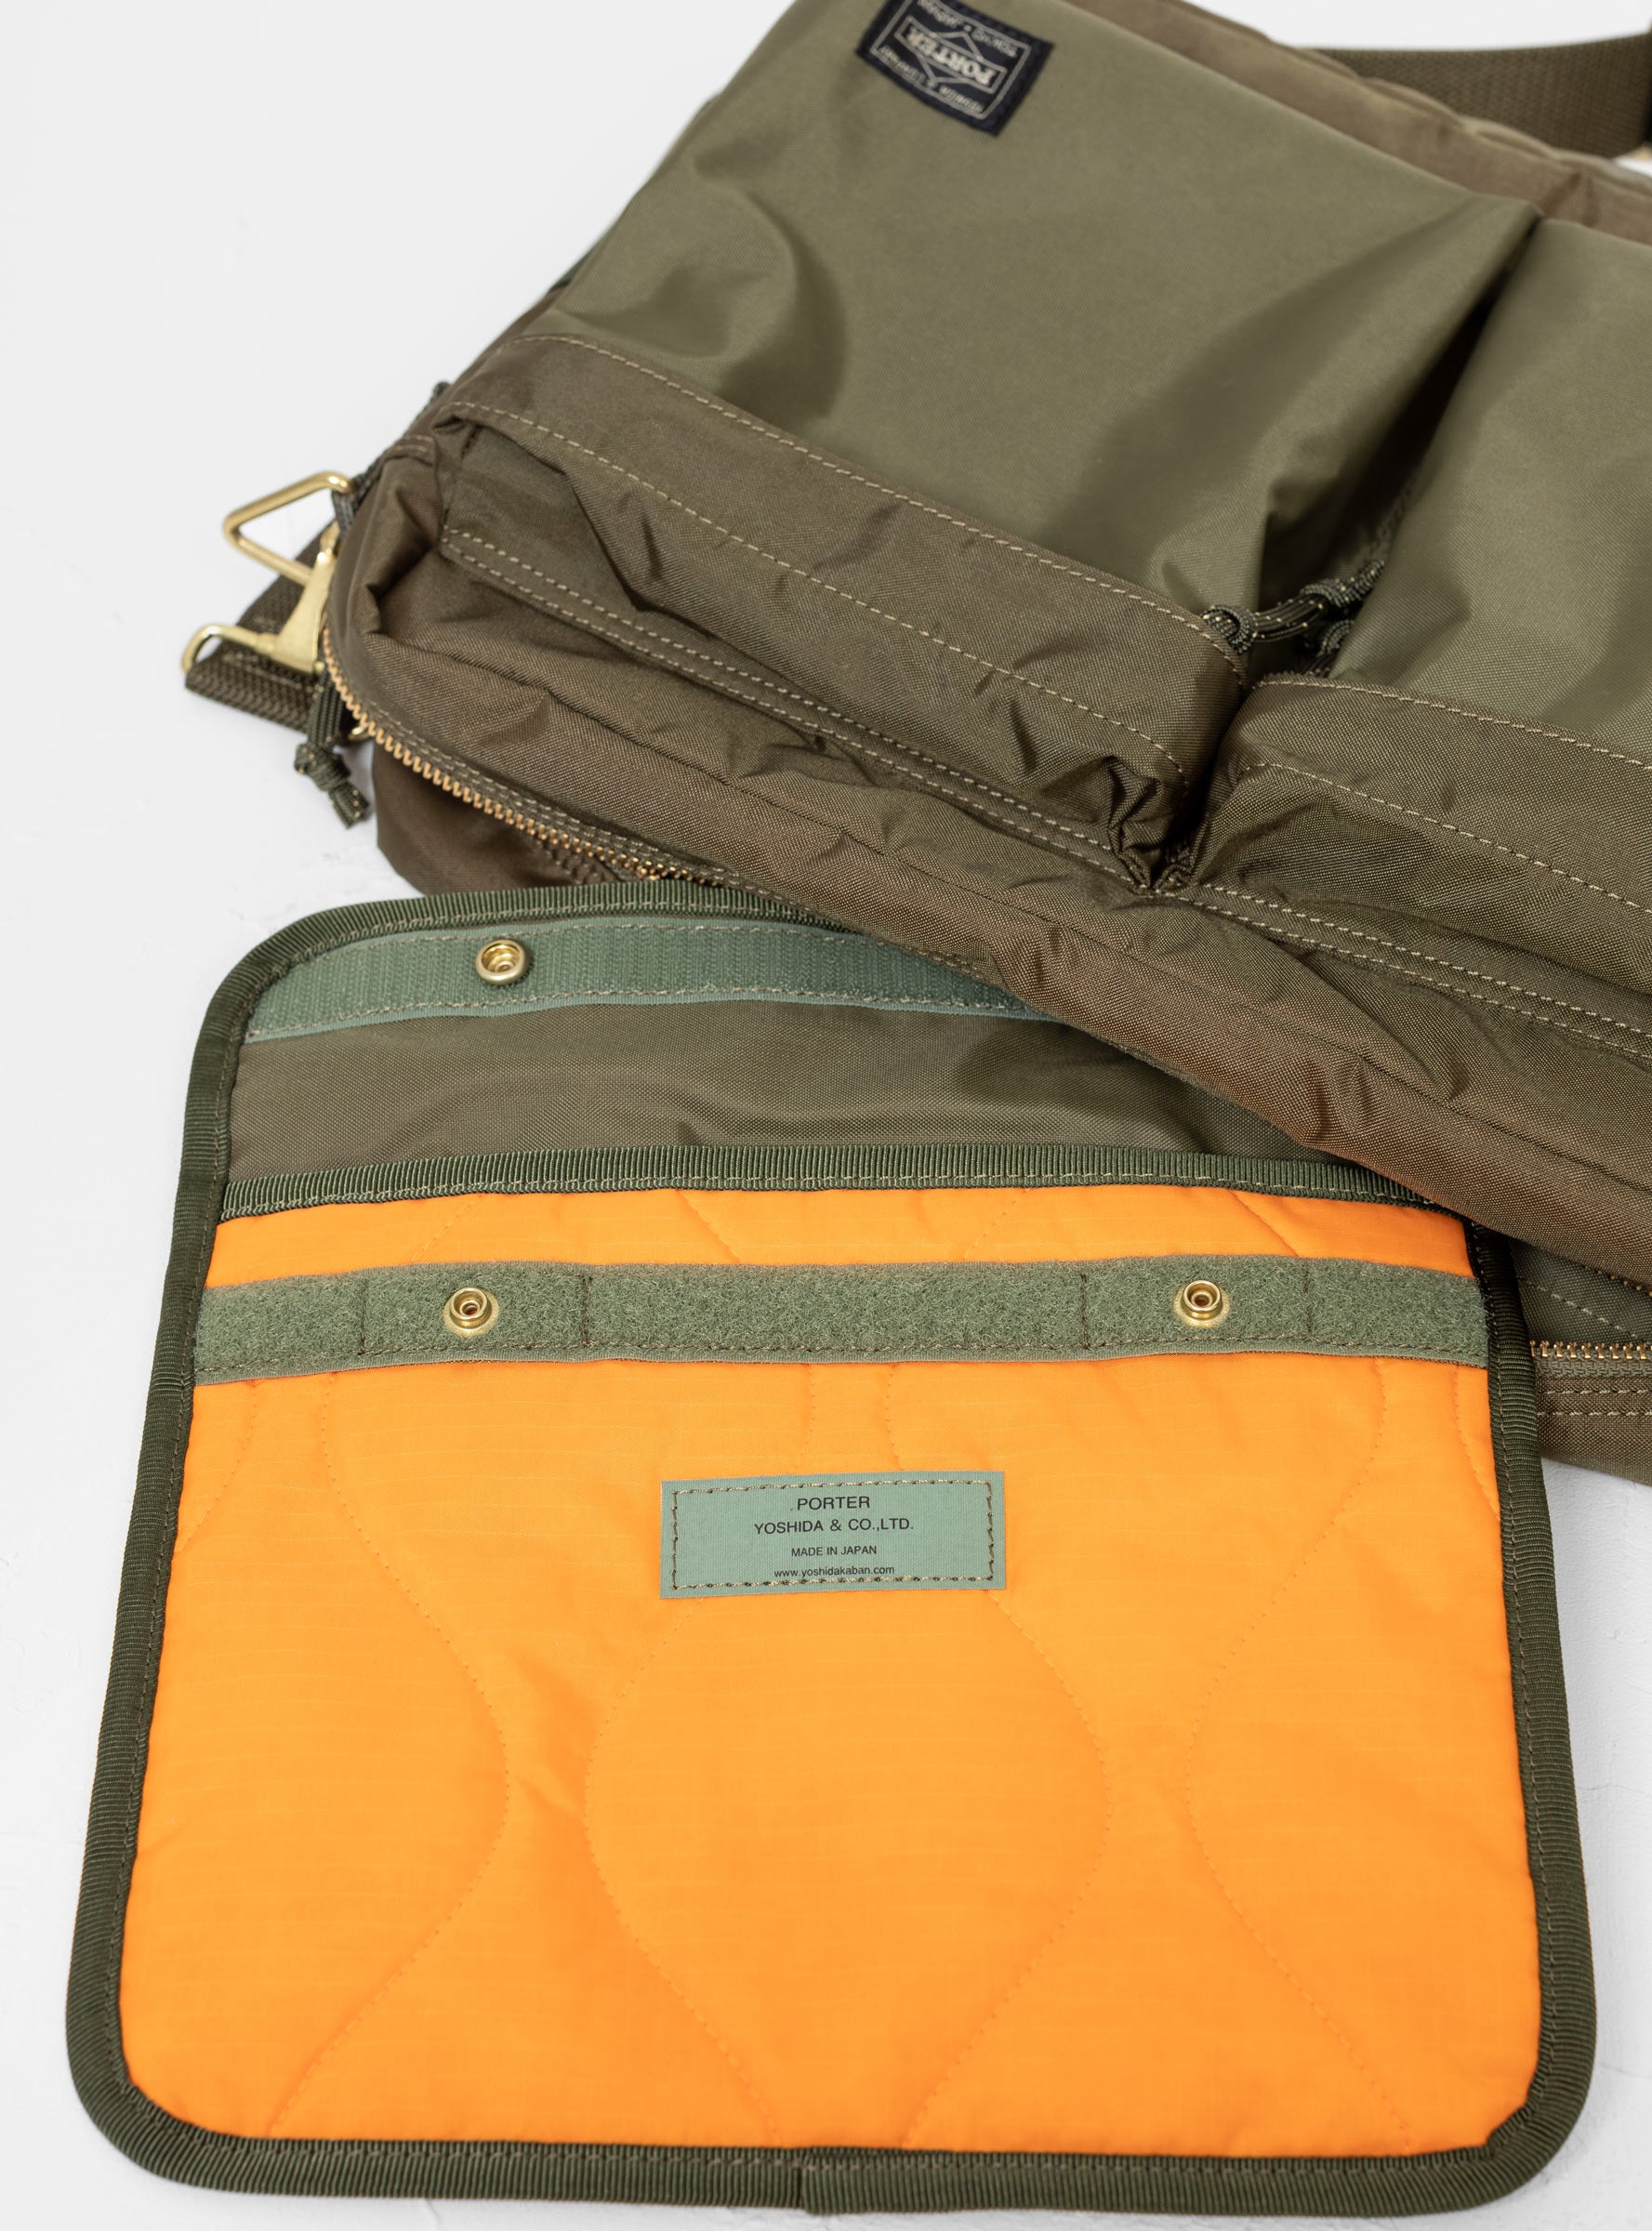 Force Shoulder Bag Olive Drab - One Size / Olive Drab — Bags Porter by Yoshida